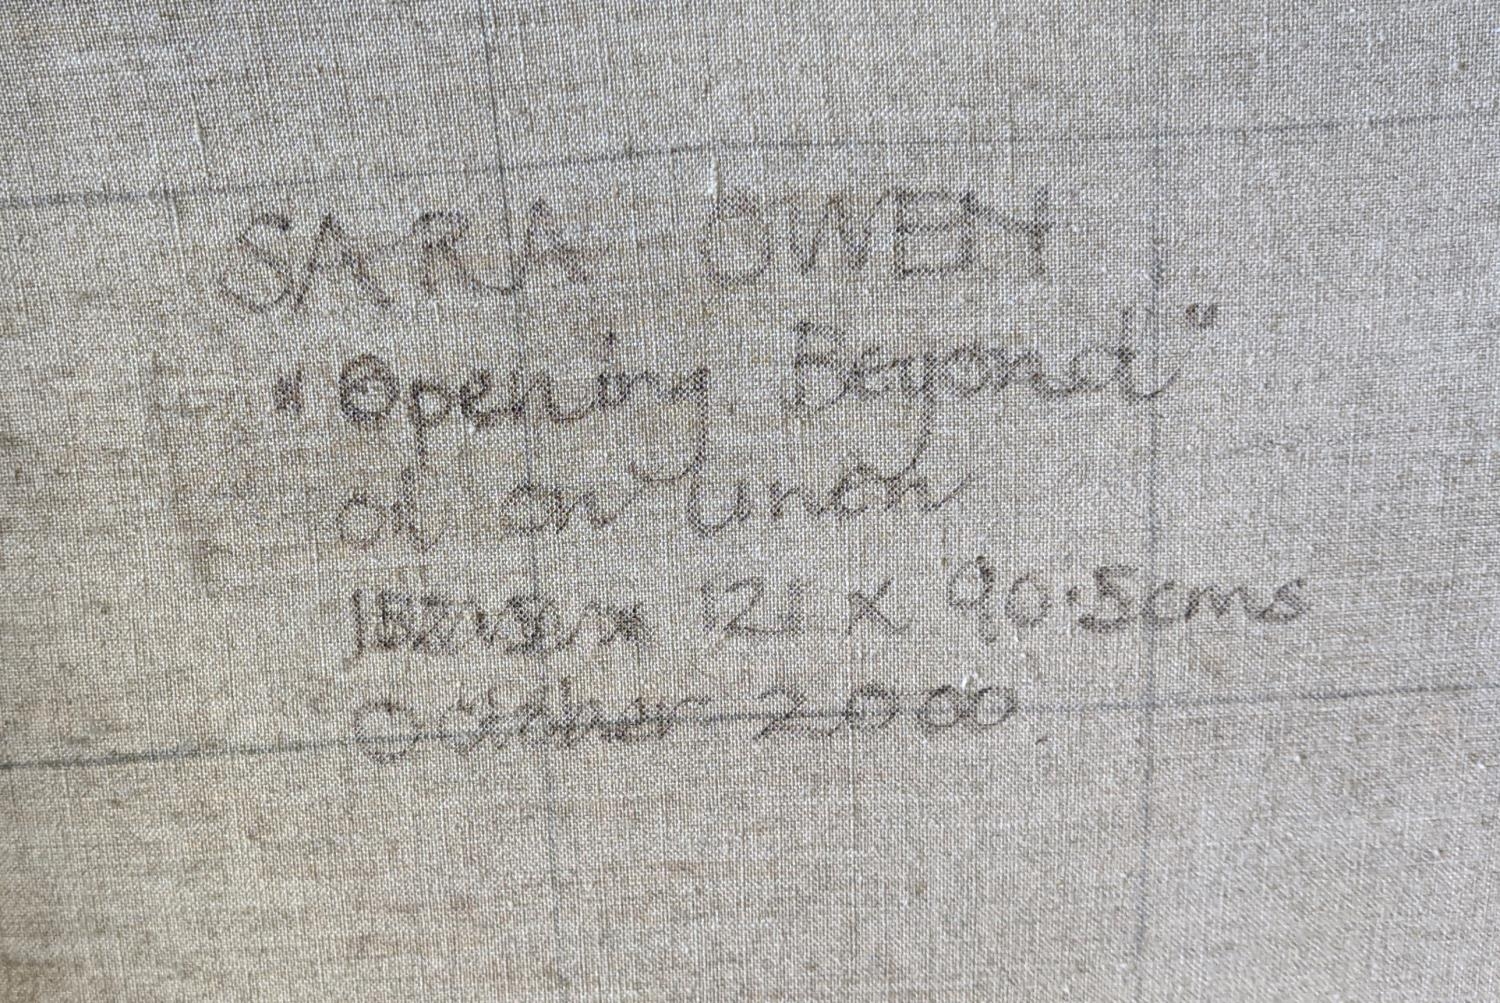 SARA OWEN, 'Opening beyond', oil on linen, 91cm x 122cm, framed. - Image 6 of 6